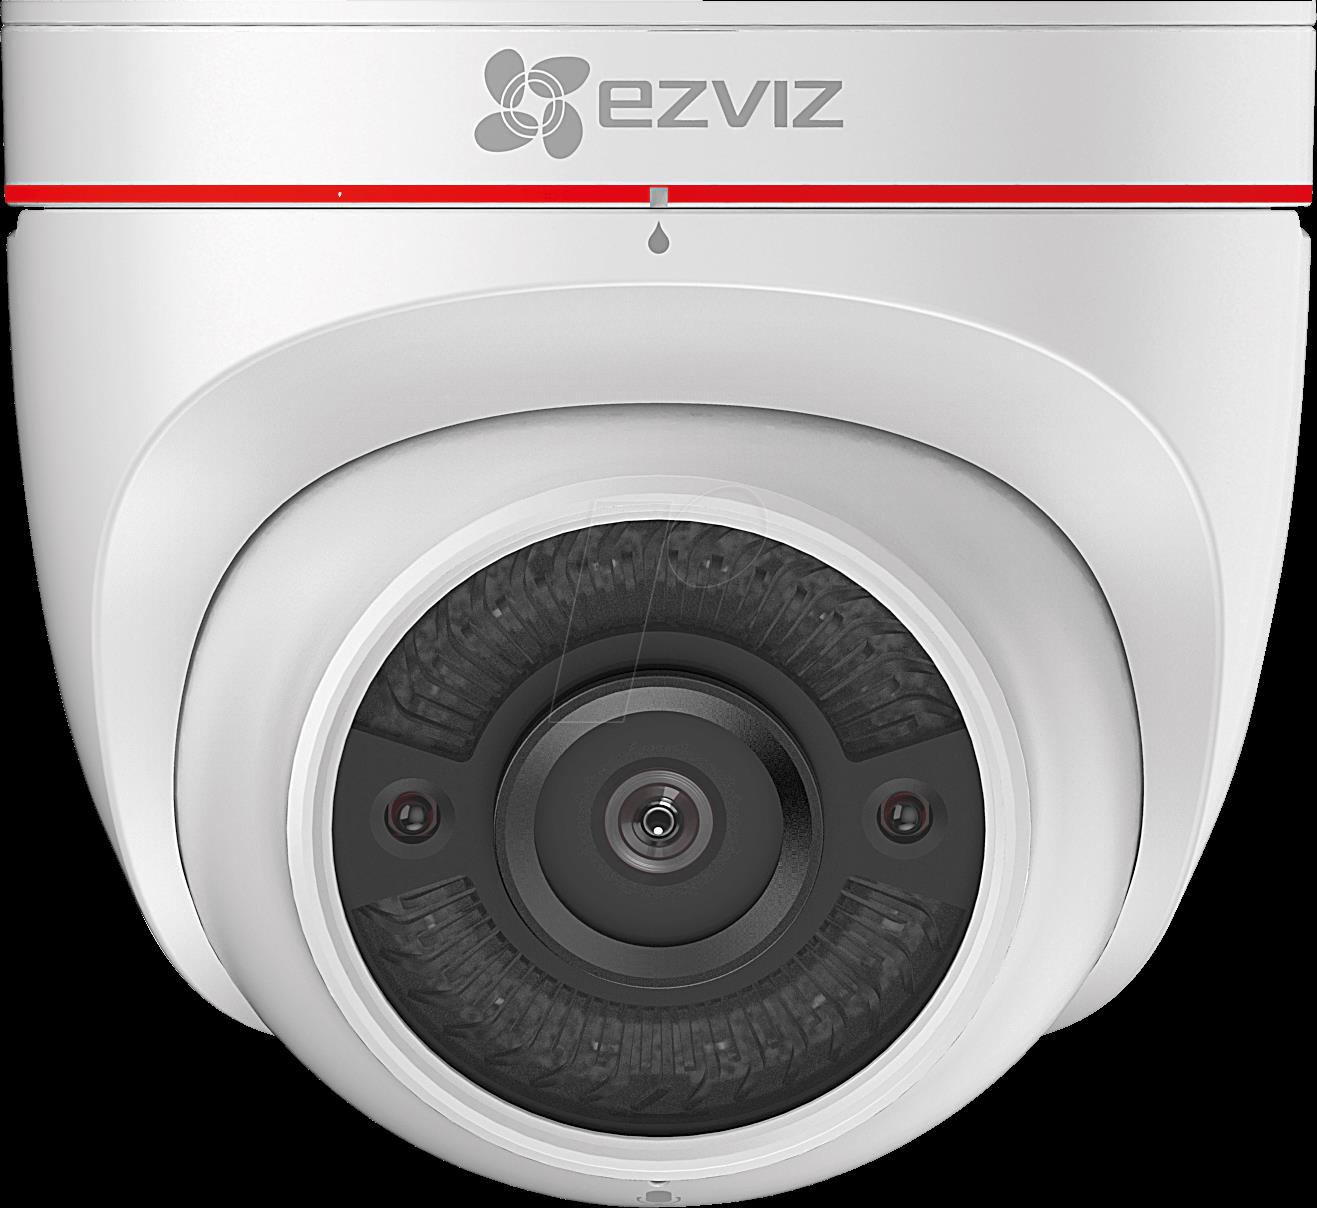 EZVIZ C4W Outdoor WLAN Dome Kamera 1/2.7 Progressive Scan CMOS, 2.8mm lens, 103° Horizontal, 118° Diagonal, 3D DNR, Digital WDR, H.265/H.264, 1920*1080, Max30fps, Self-Adaptive, Motion Detection, Active defense with Siren and Strobe light, Wi-Fi 2.4G